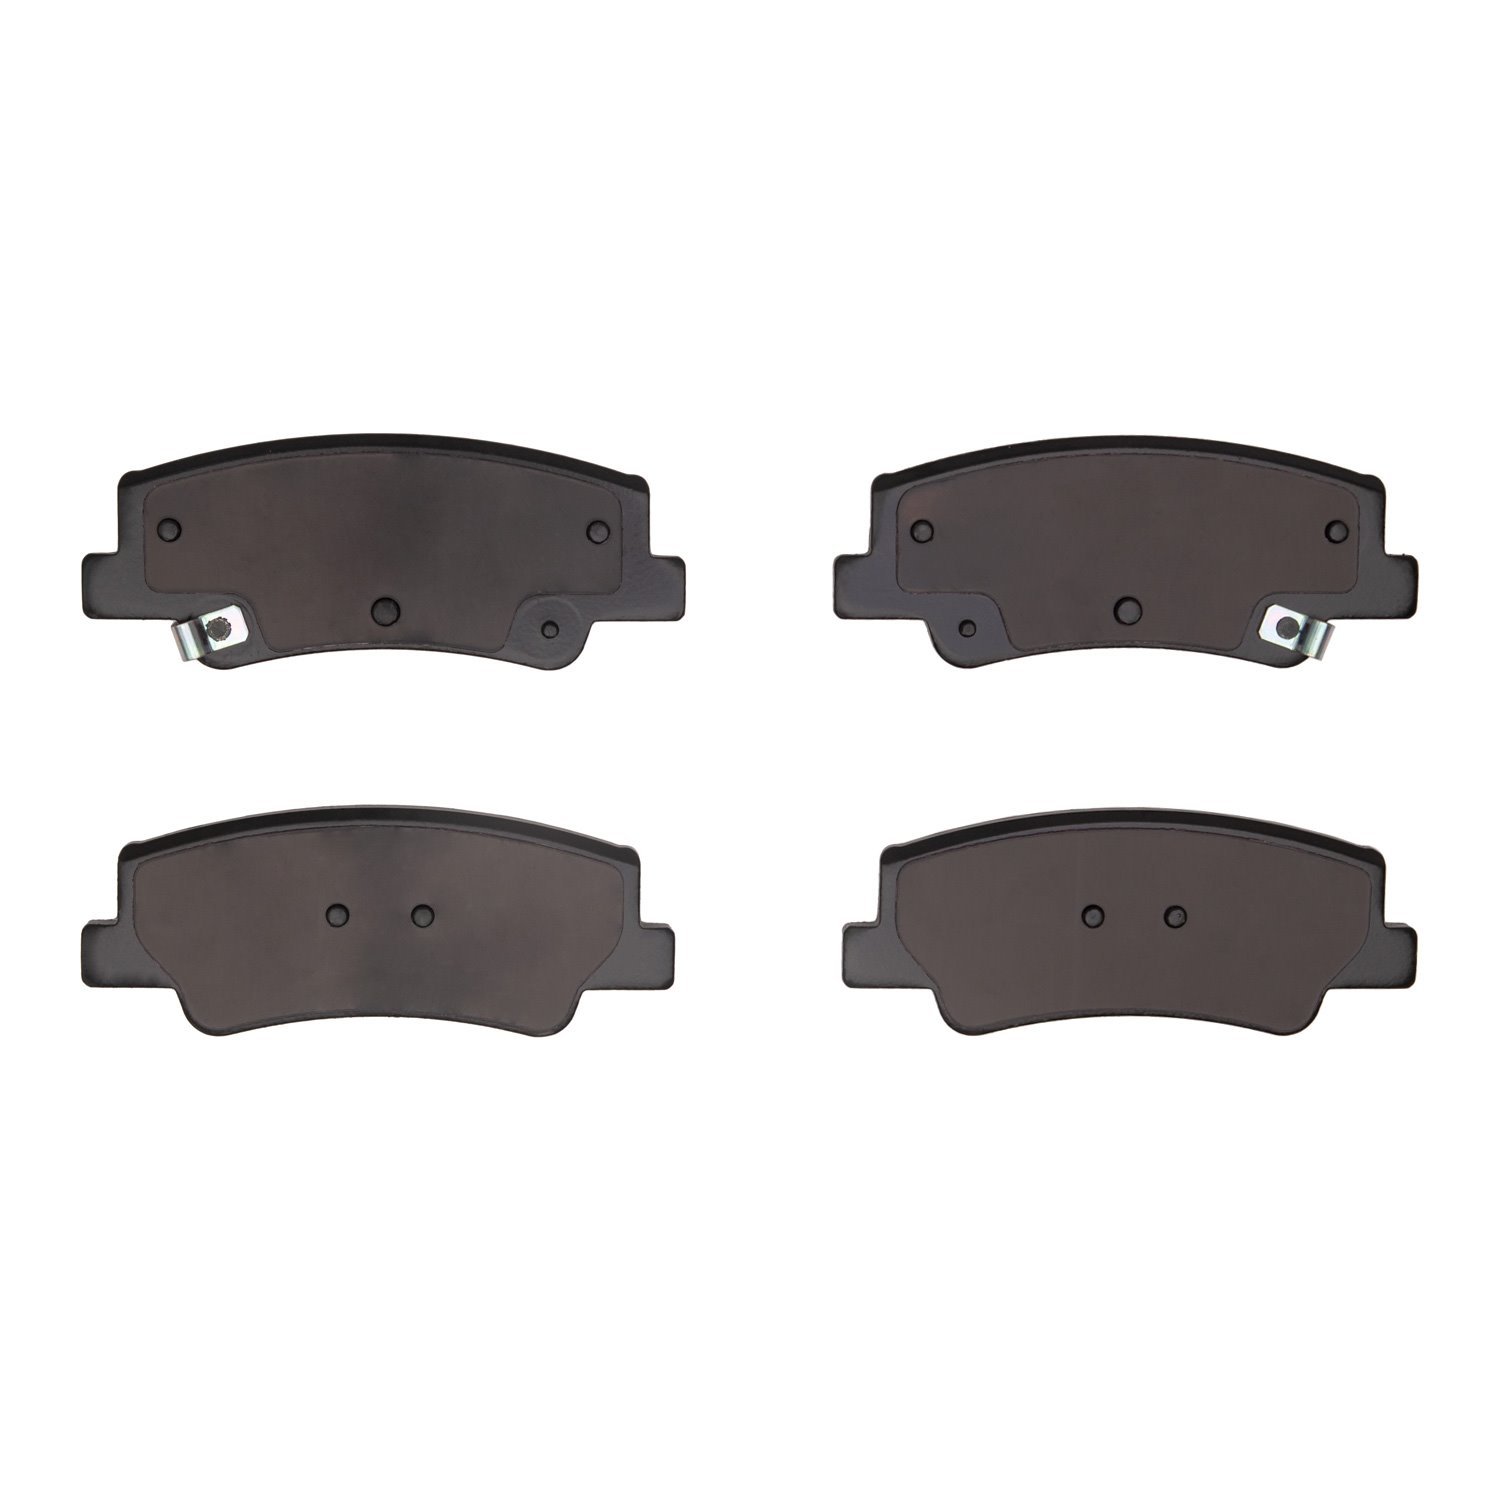 1551-2299-00 5000 Advanced Ceramic Brake Pads, Fits Select Kia/Hyundai/Genesis, Position: Rear